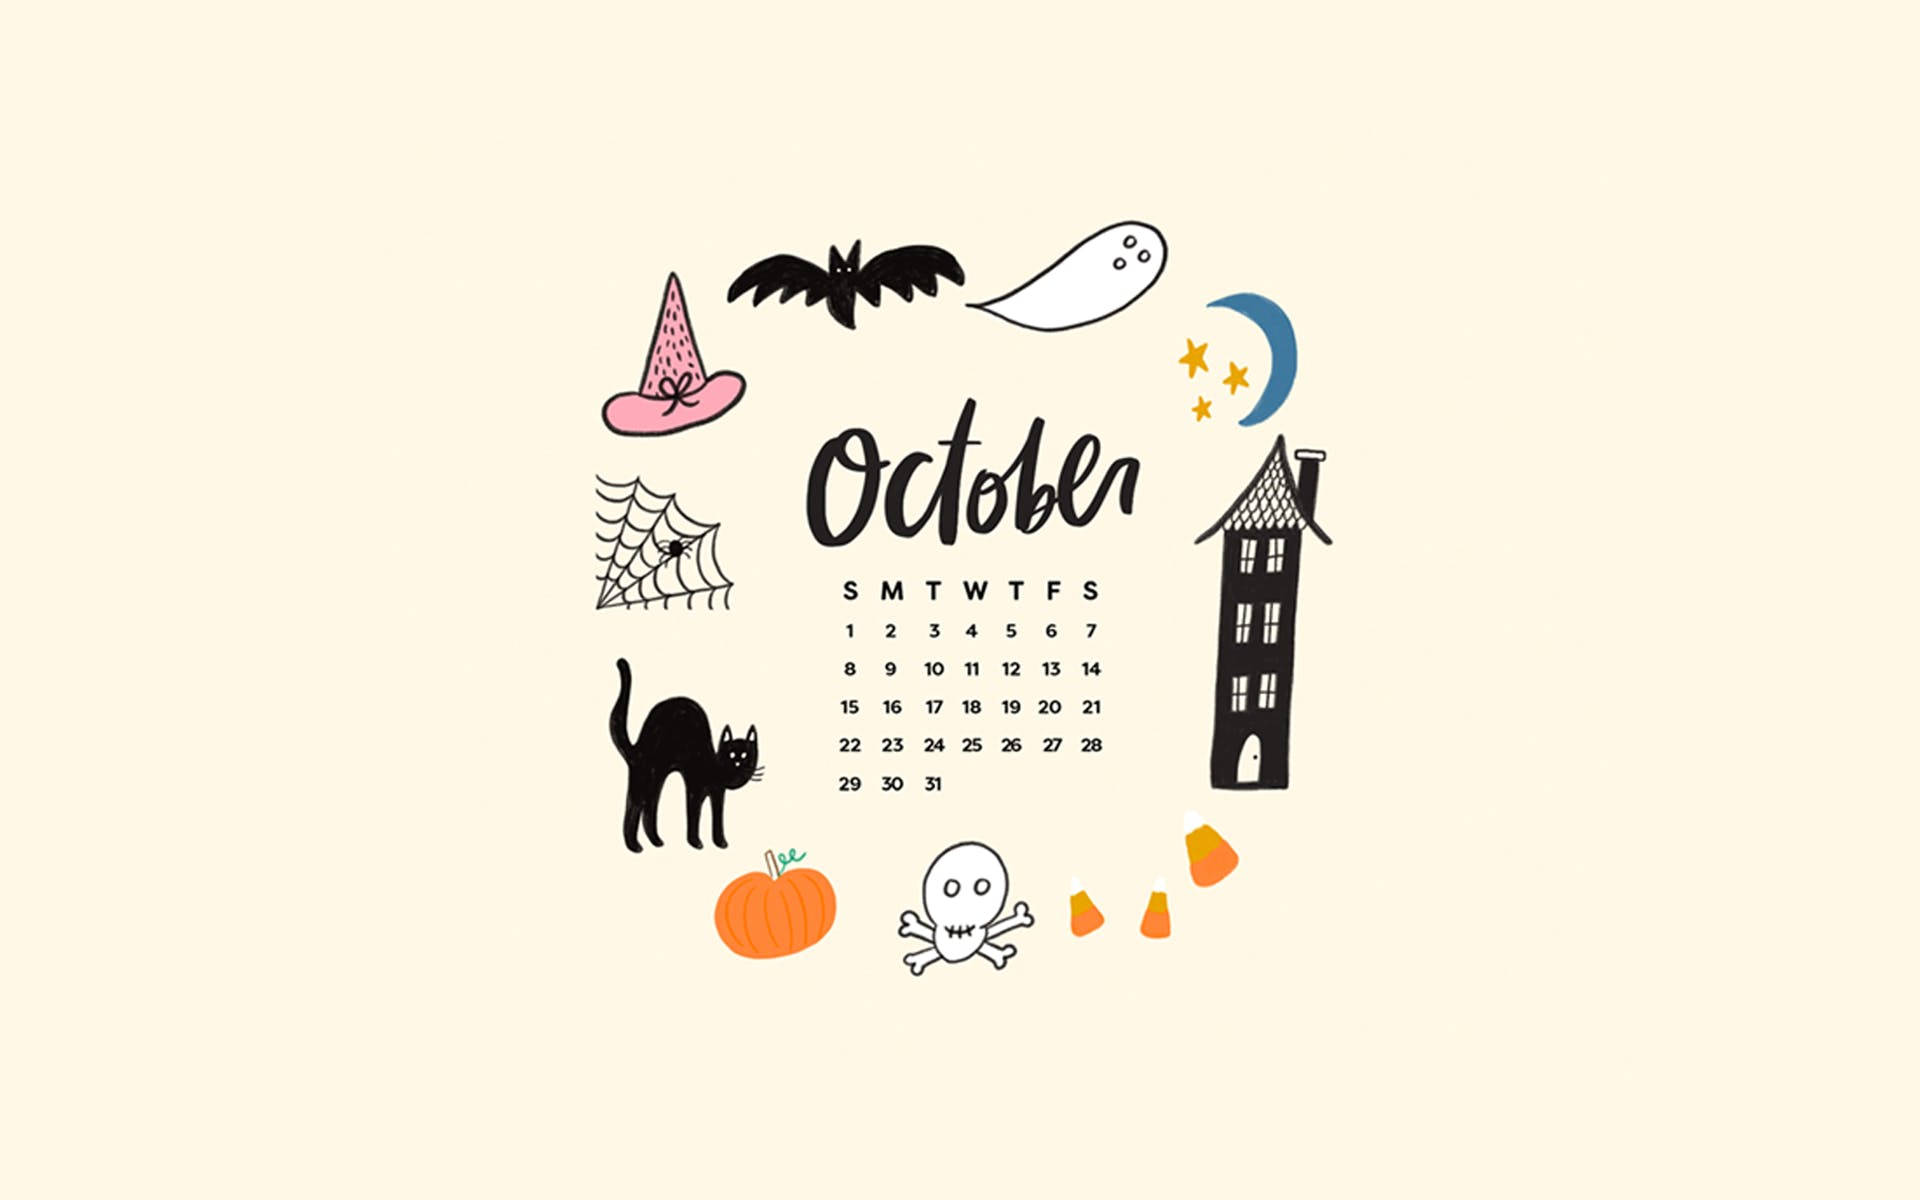 Cute Halloween Windows 1110 Theme  themepackme